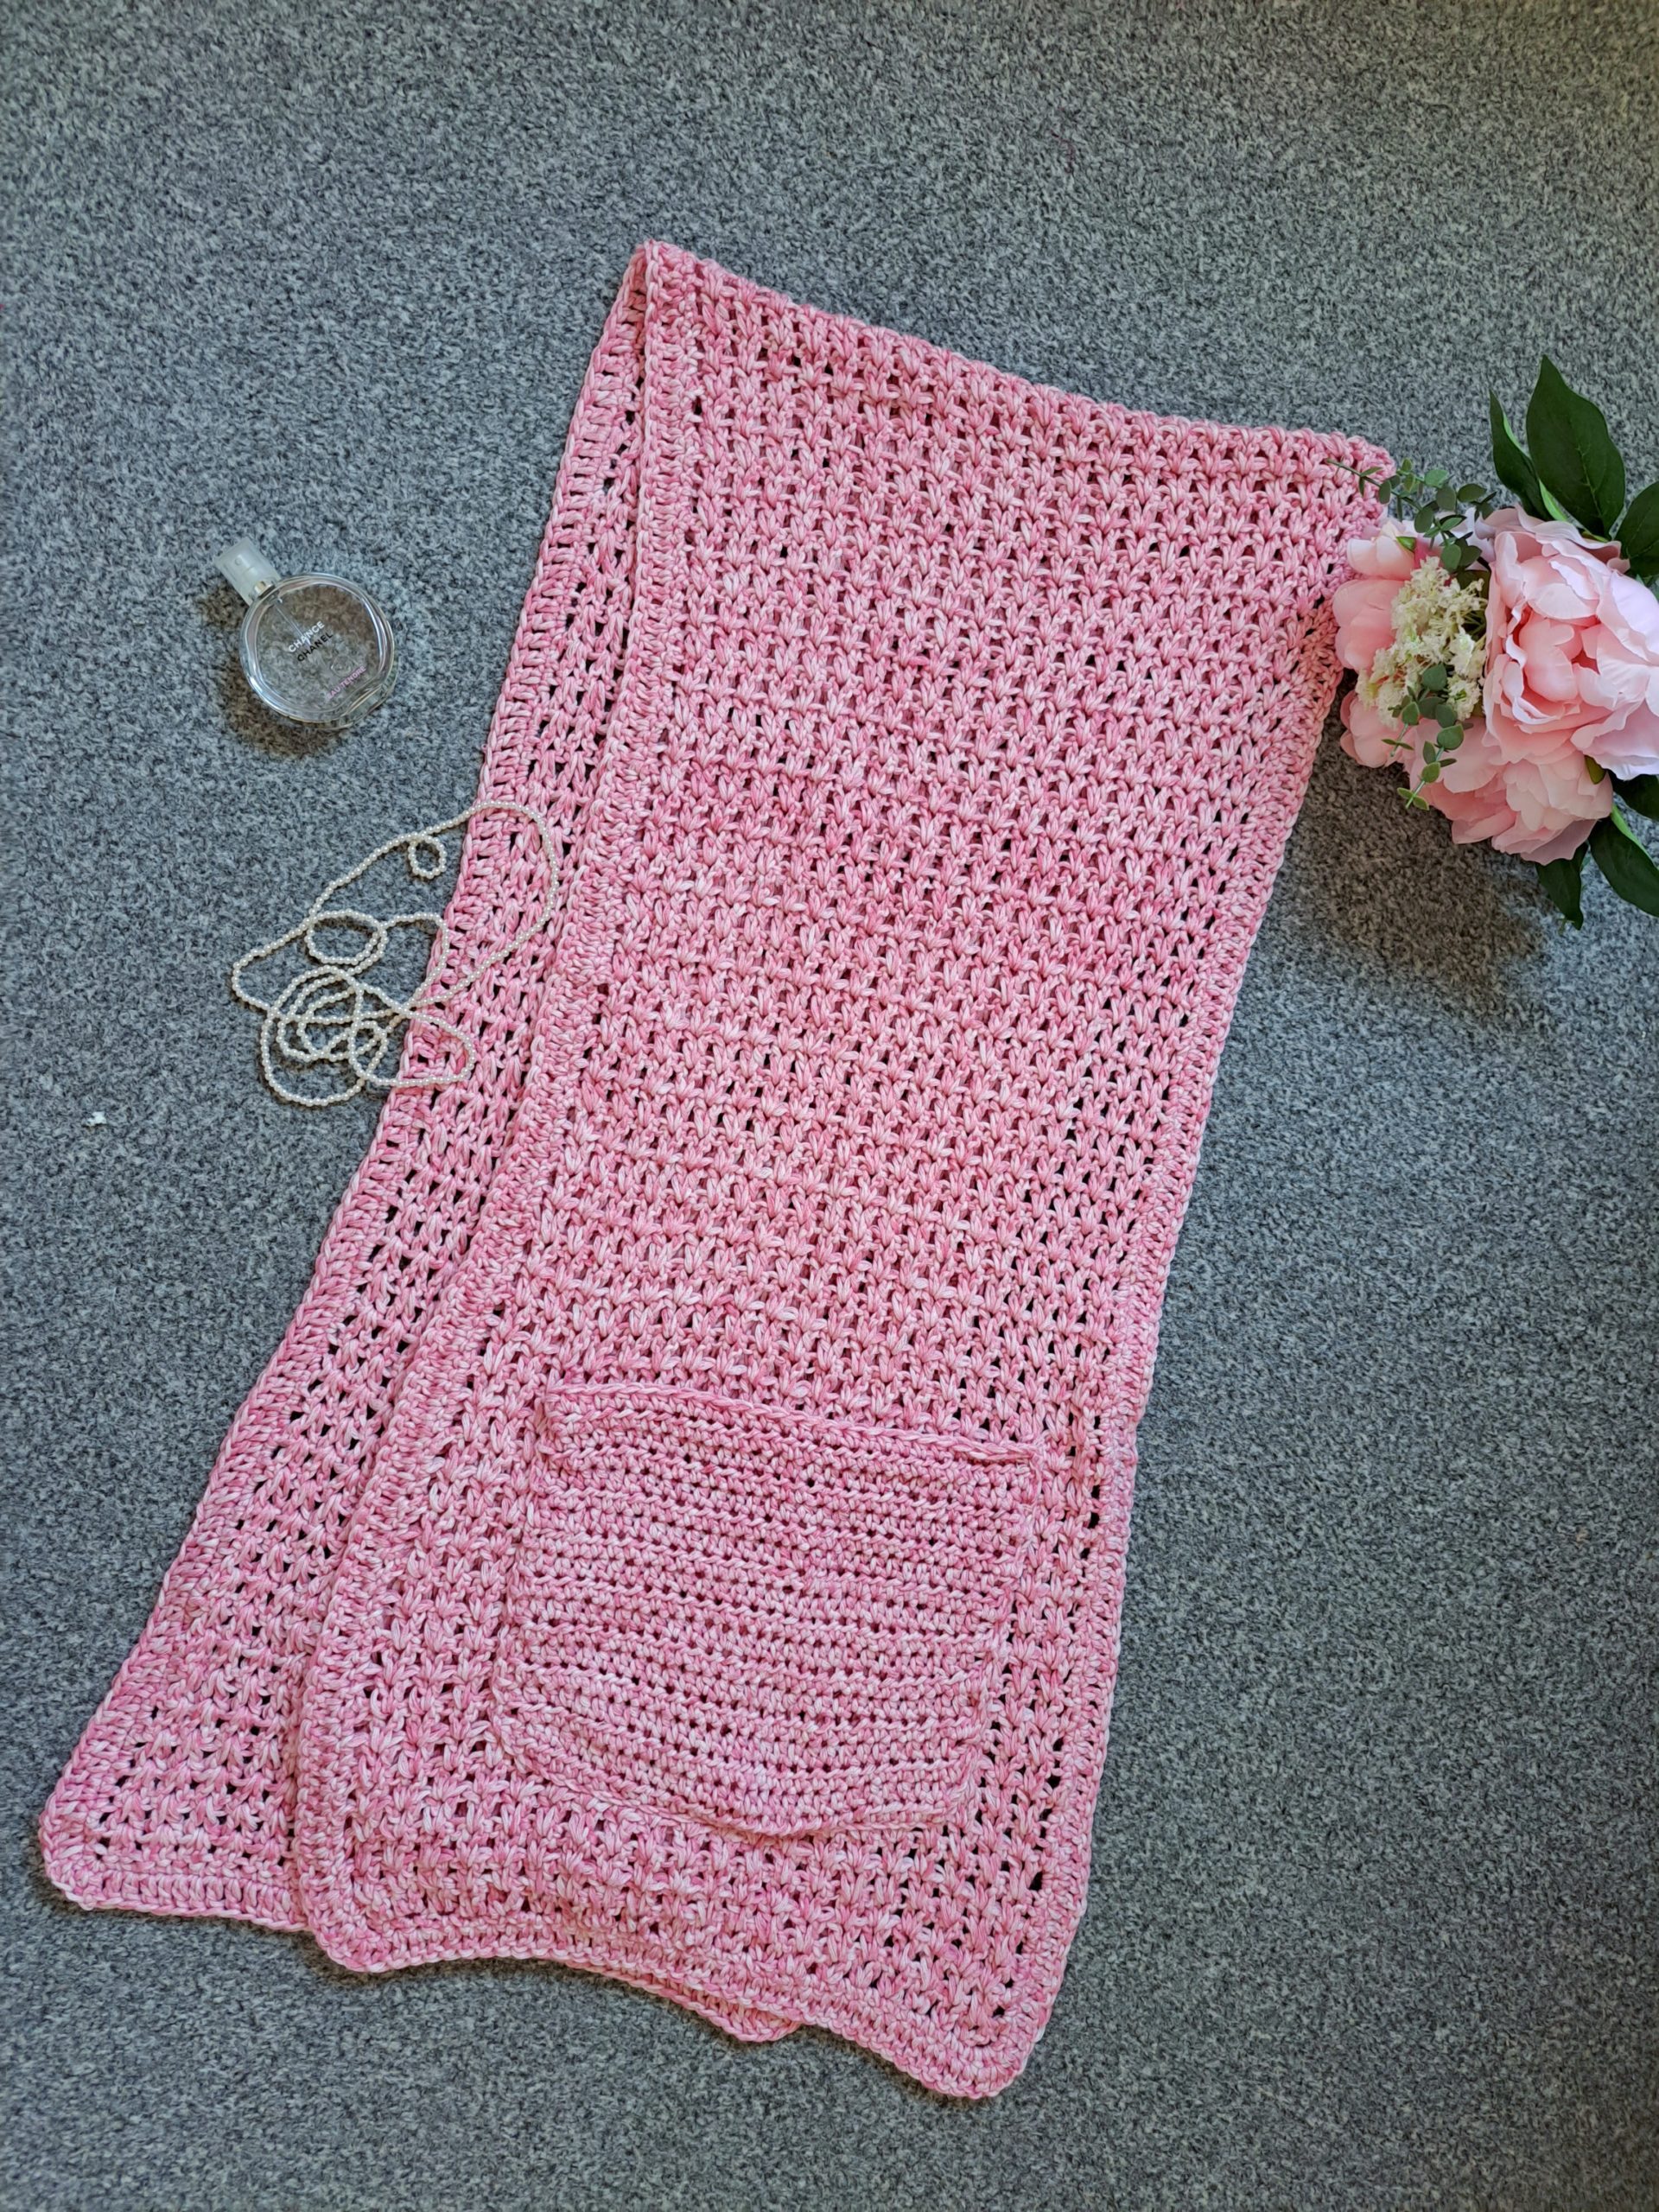 Crochet Pink Pocket Shawl Free Pattern